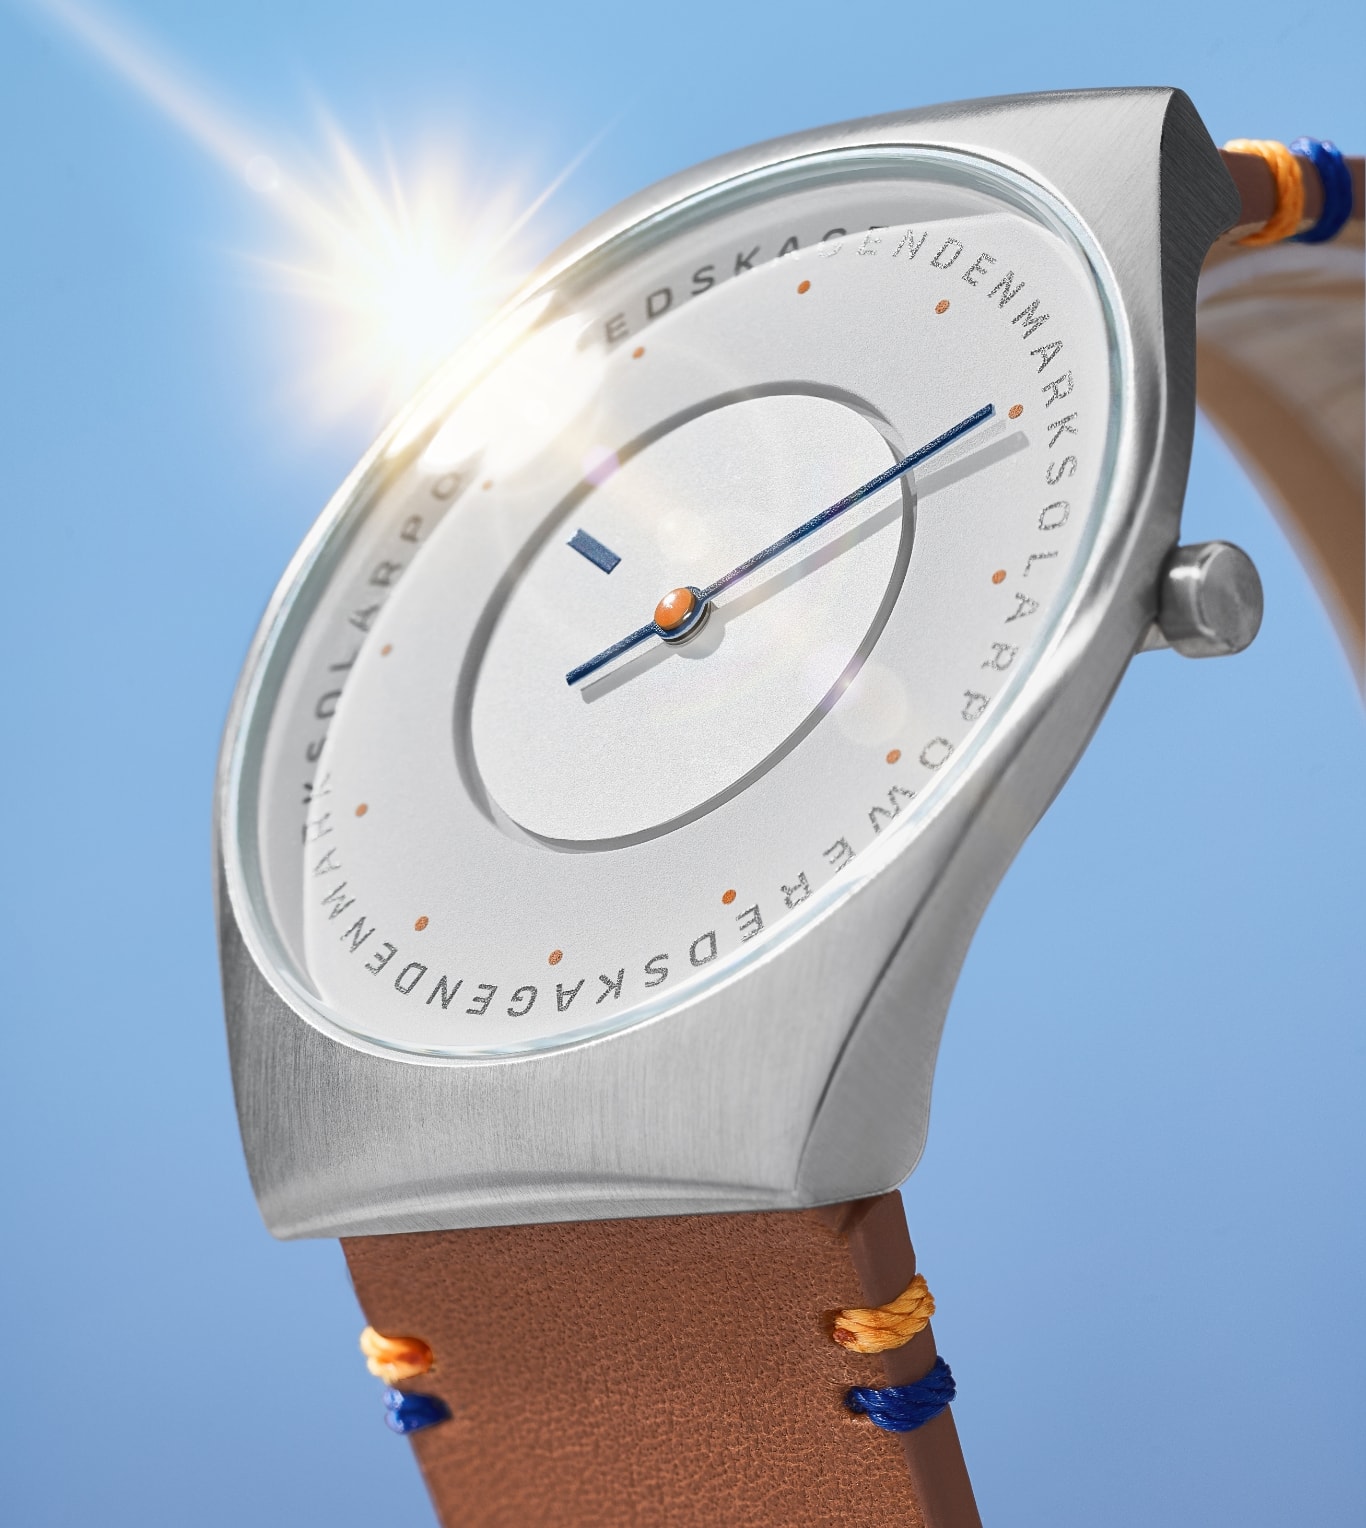 Hero image of a solar-powered Skagen watch